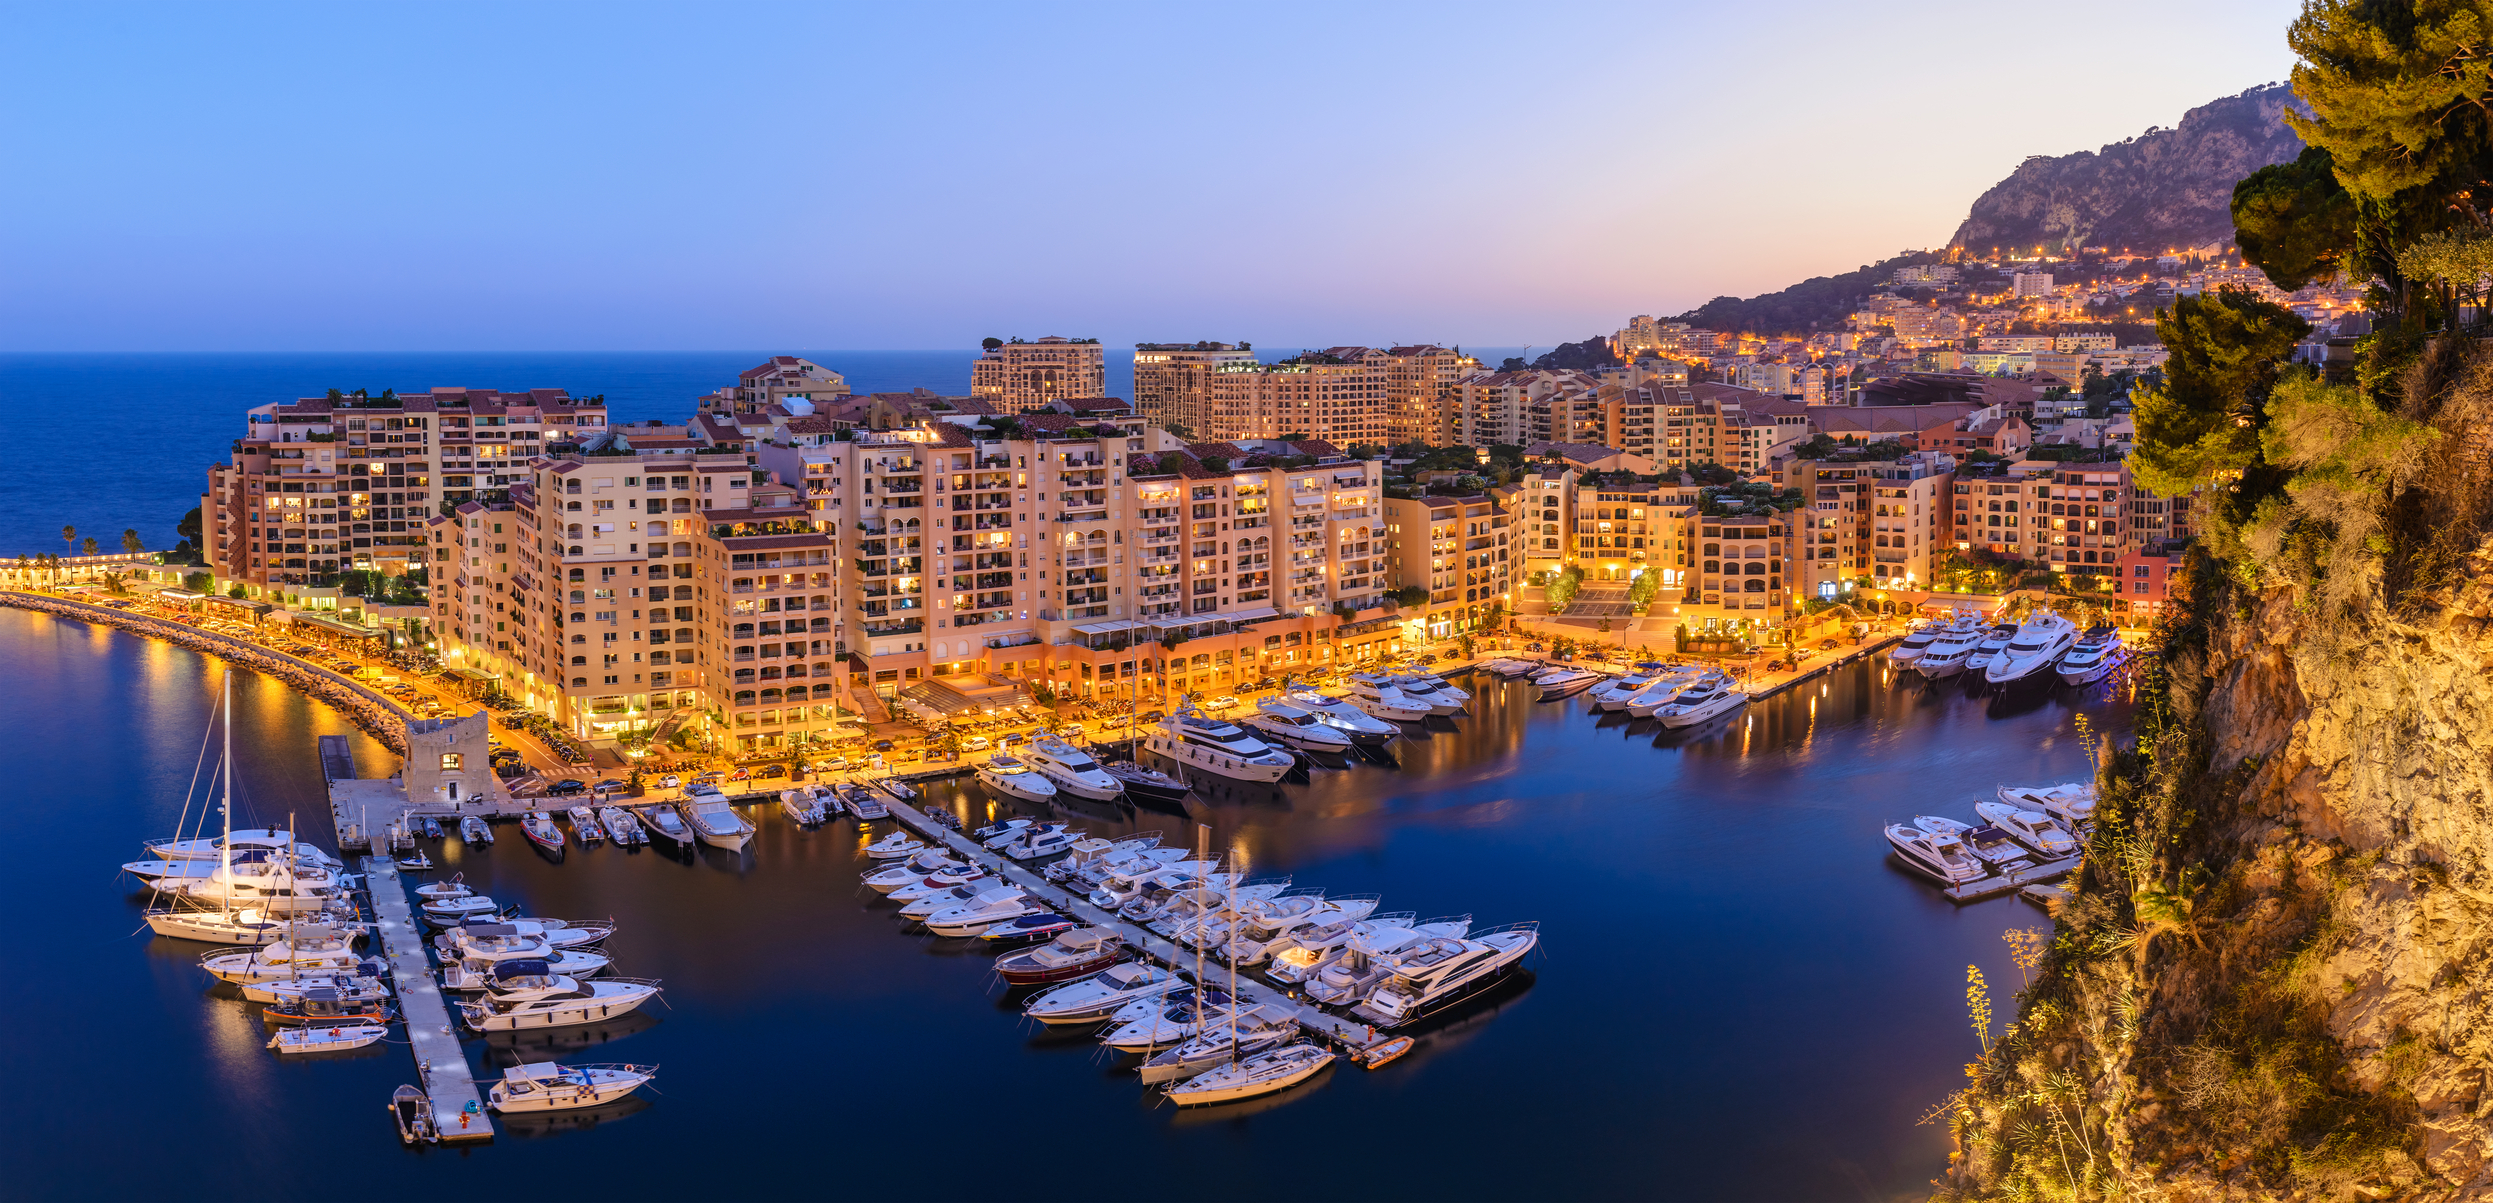 10 Best Things to Do in Monaco